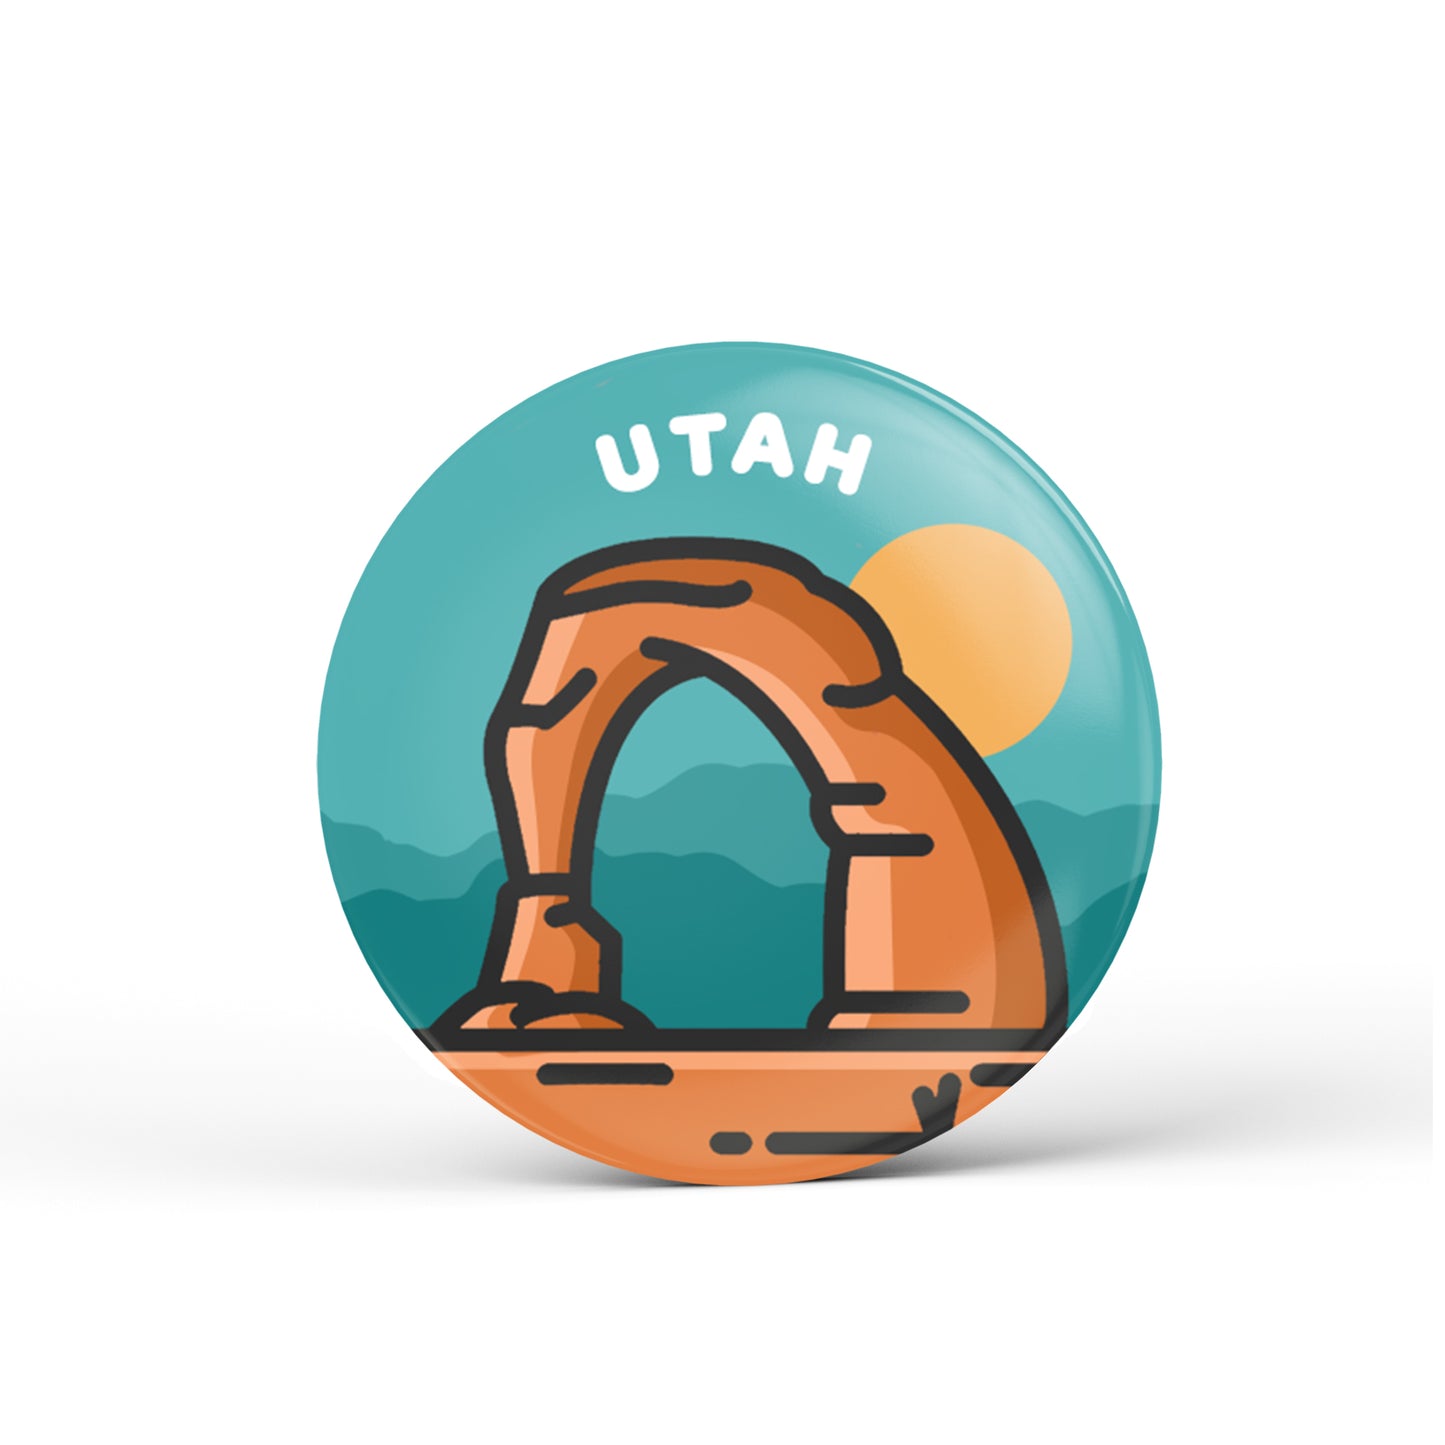 Utah Button